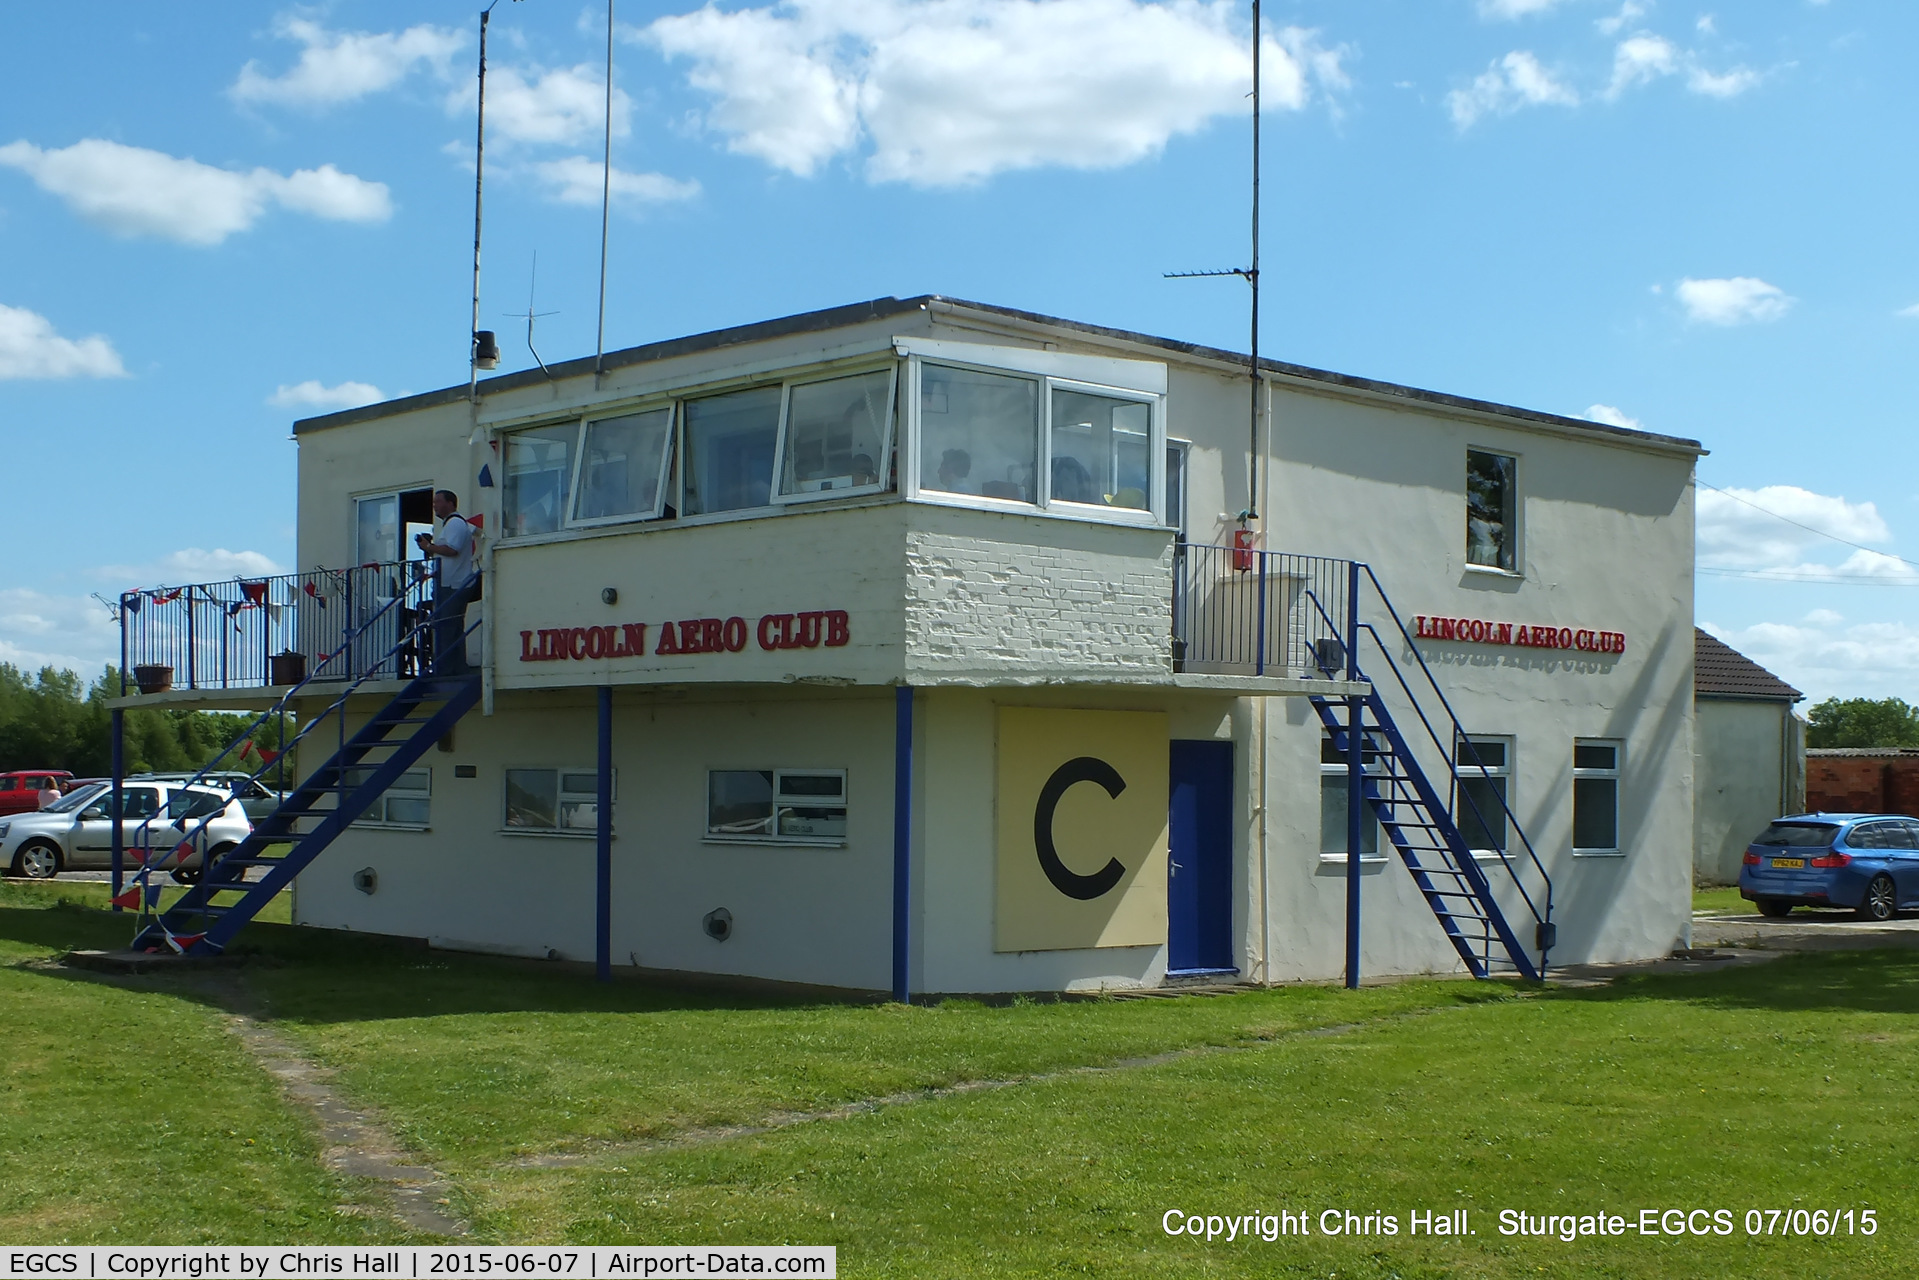 Sturgate Airfield Airport, Lincoln, England United Kingdom (EGCS) - Sturgate Tower